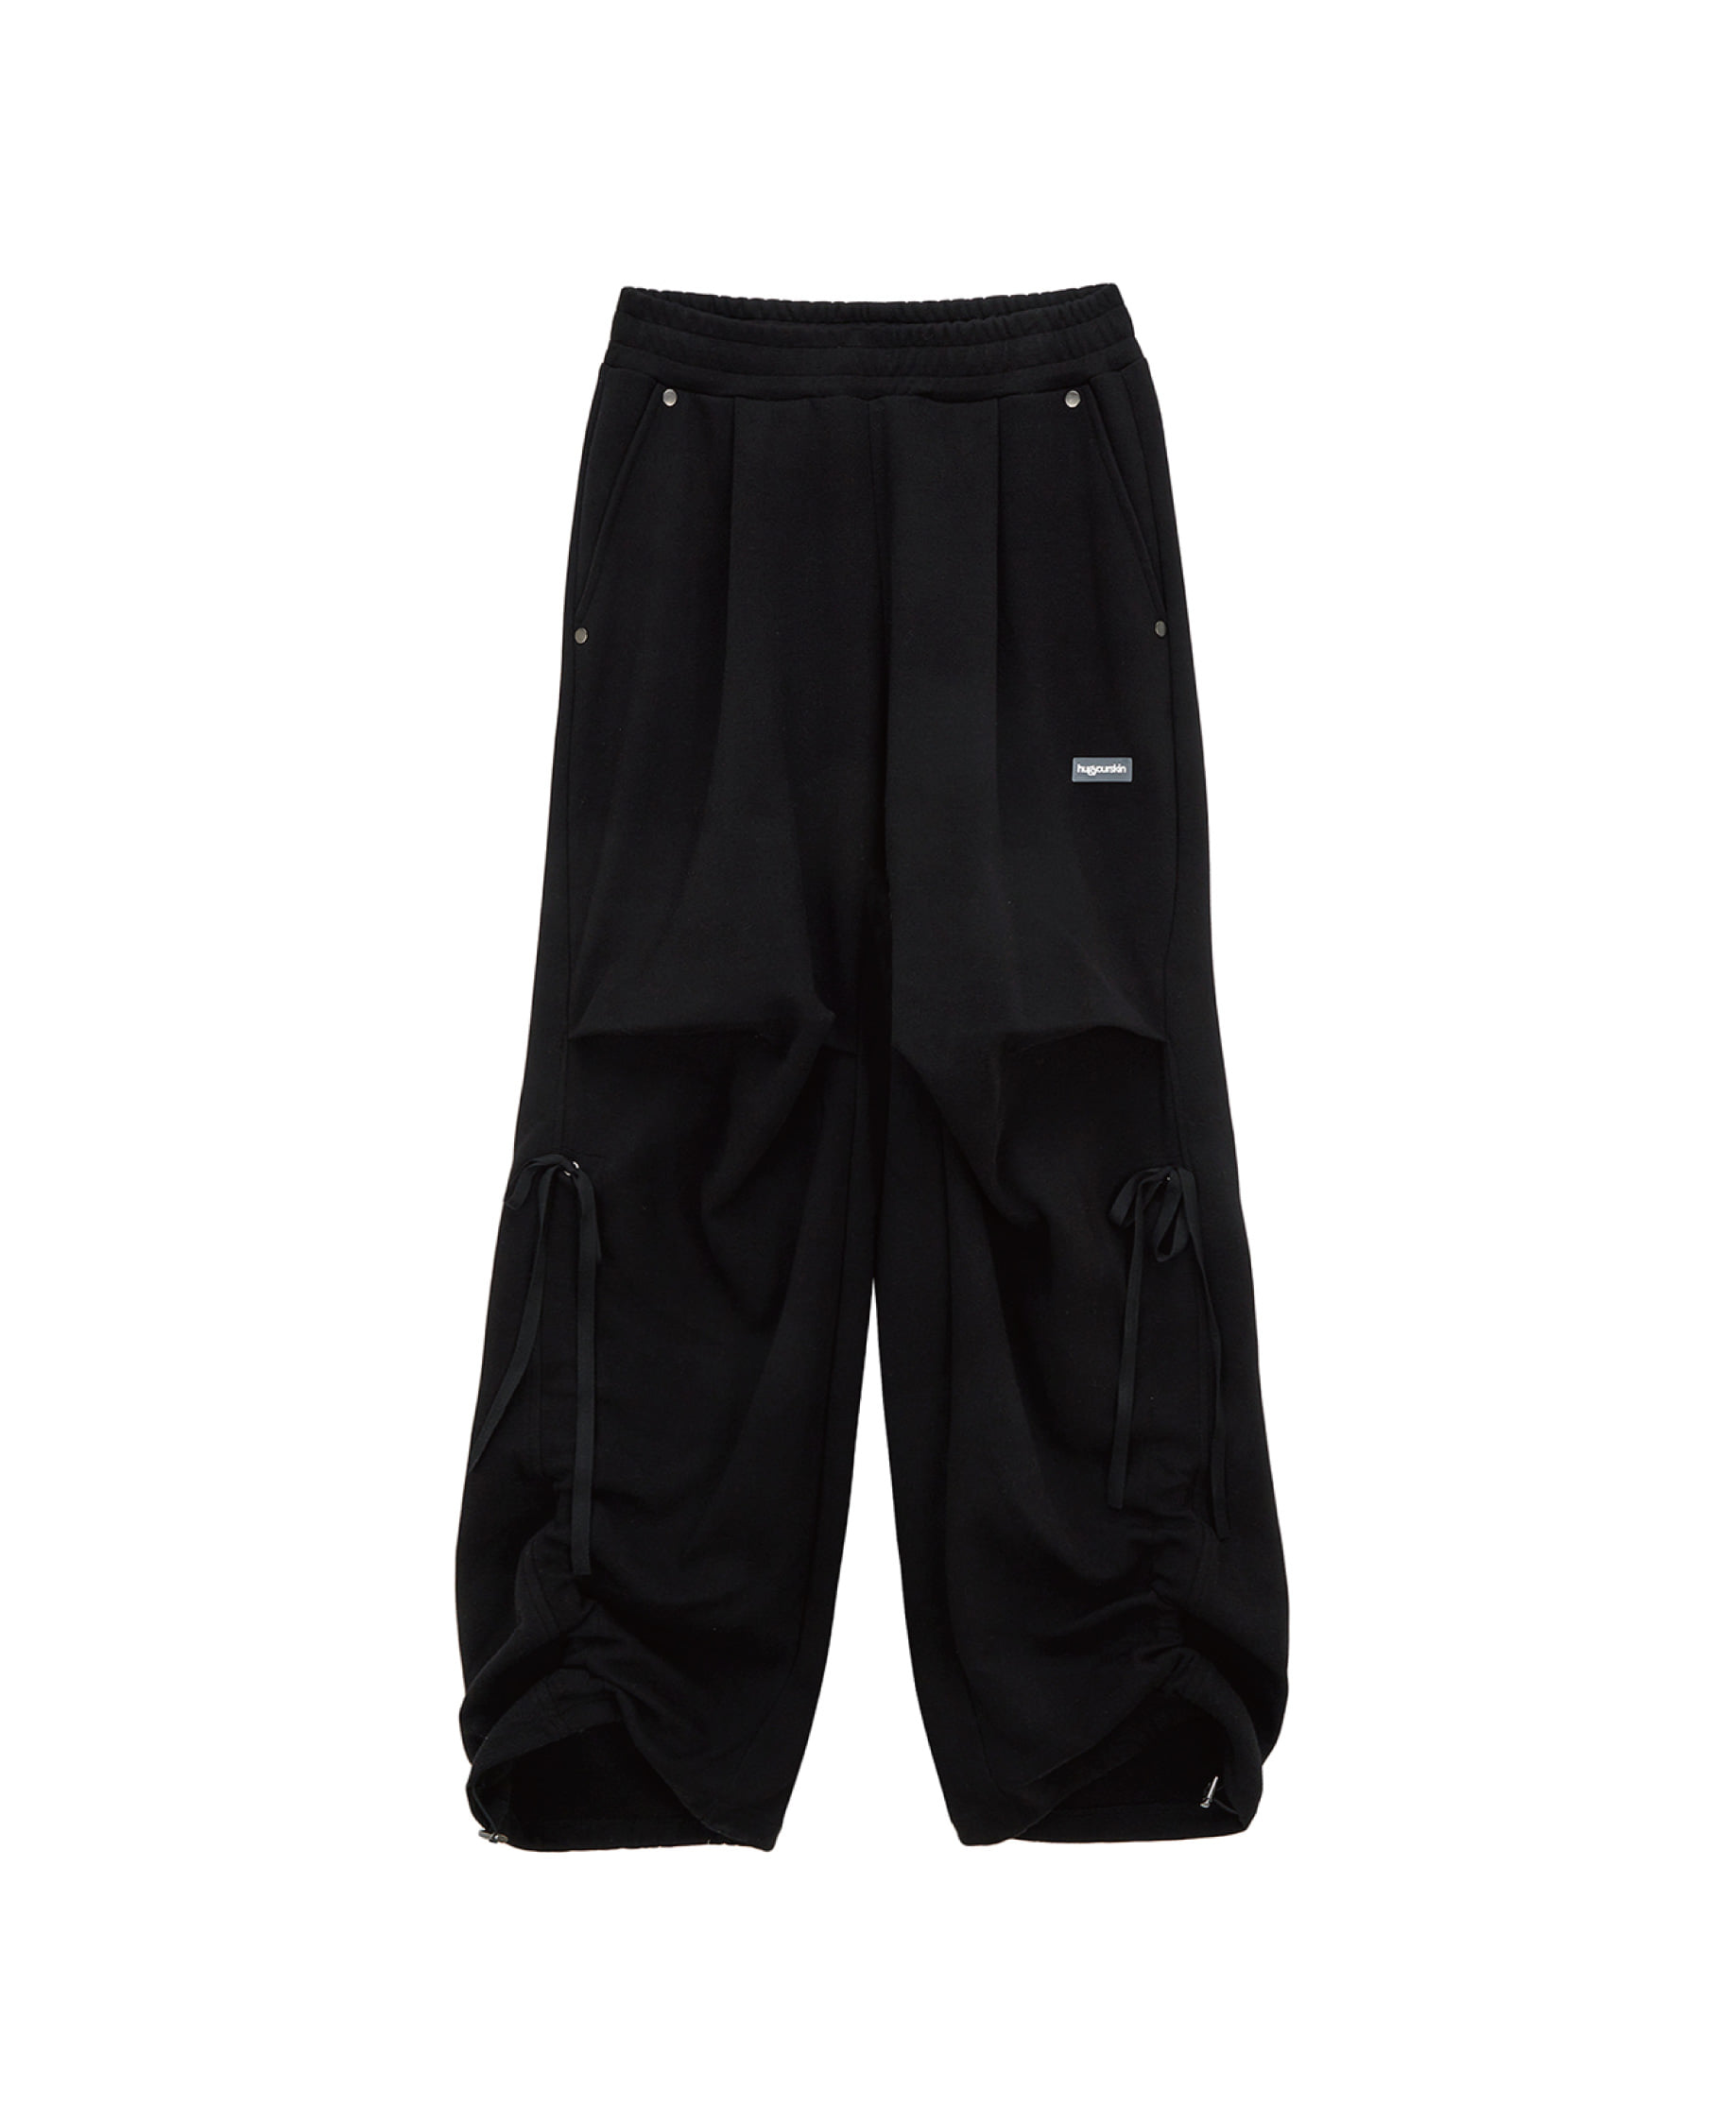 Wide jogger pants (black)